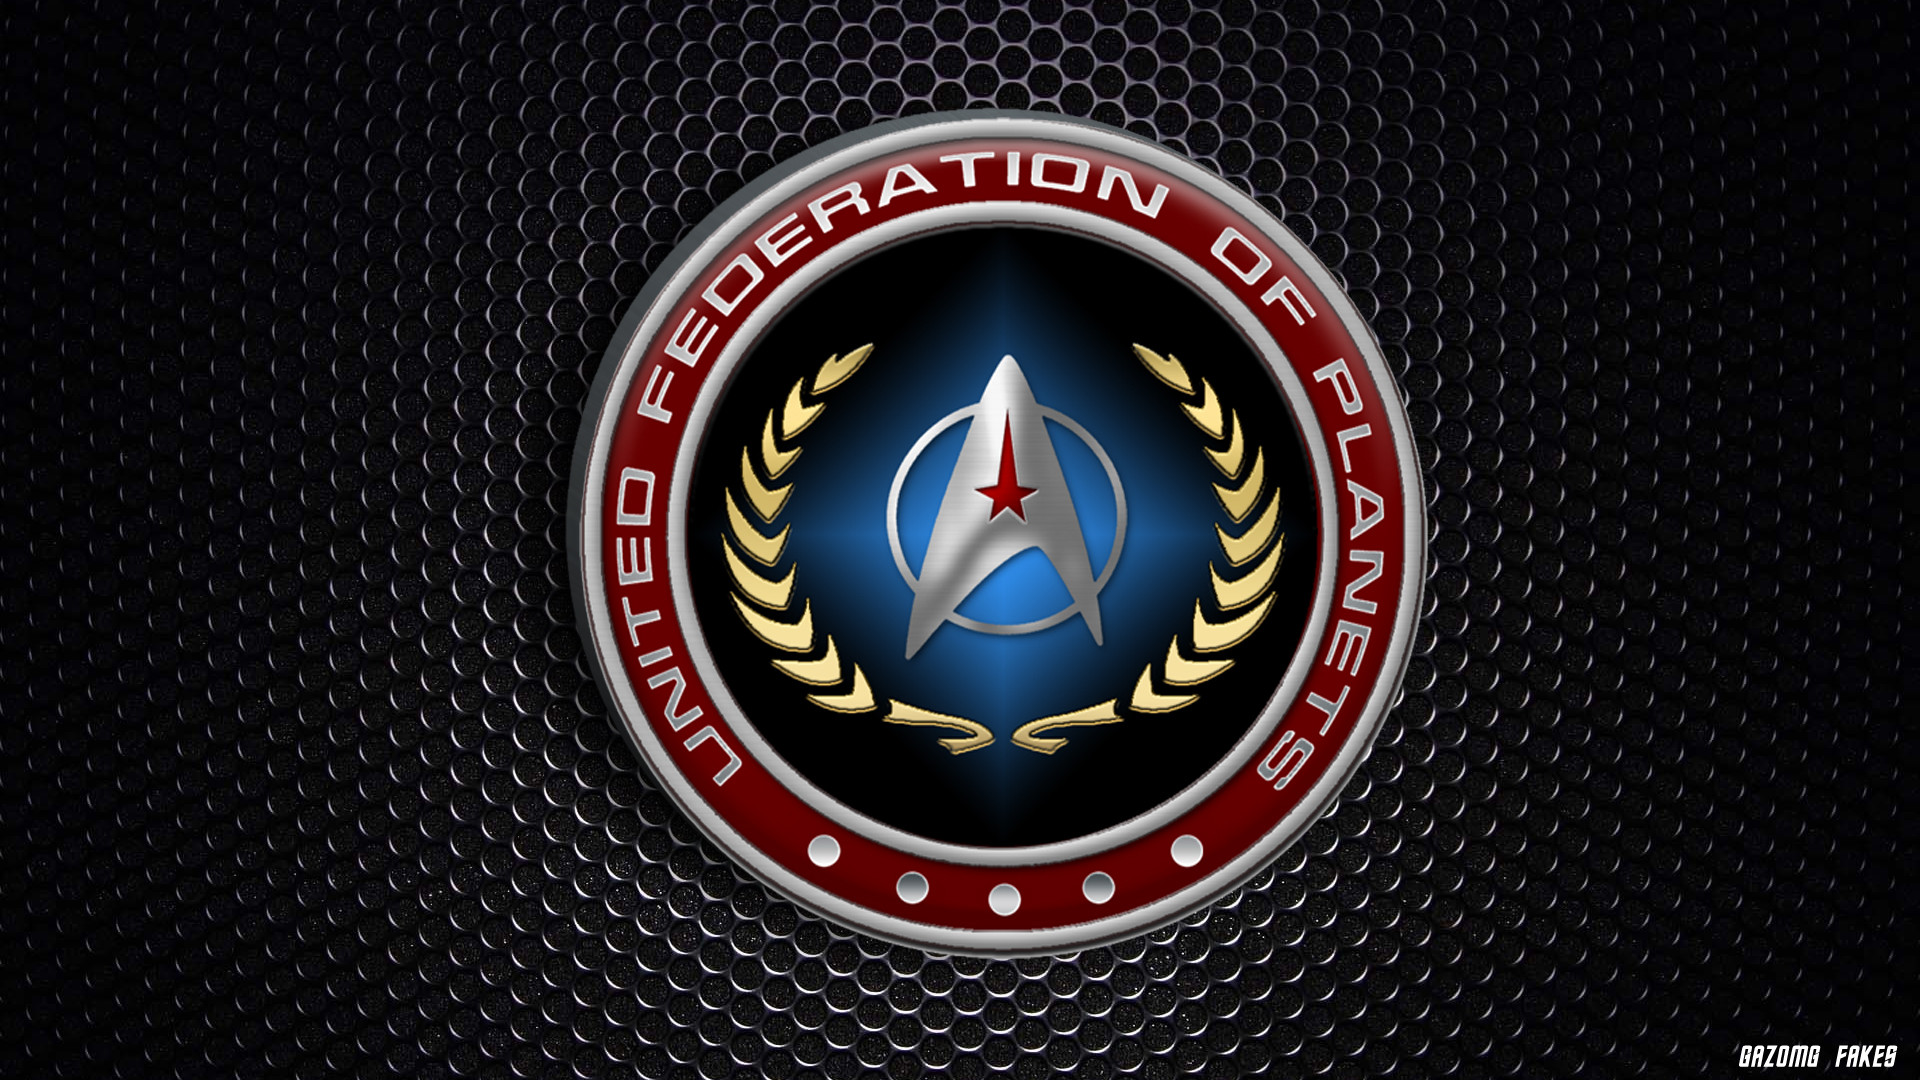 1920x1080 United Federation of Planets logo Starfleet by gazomg on .